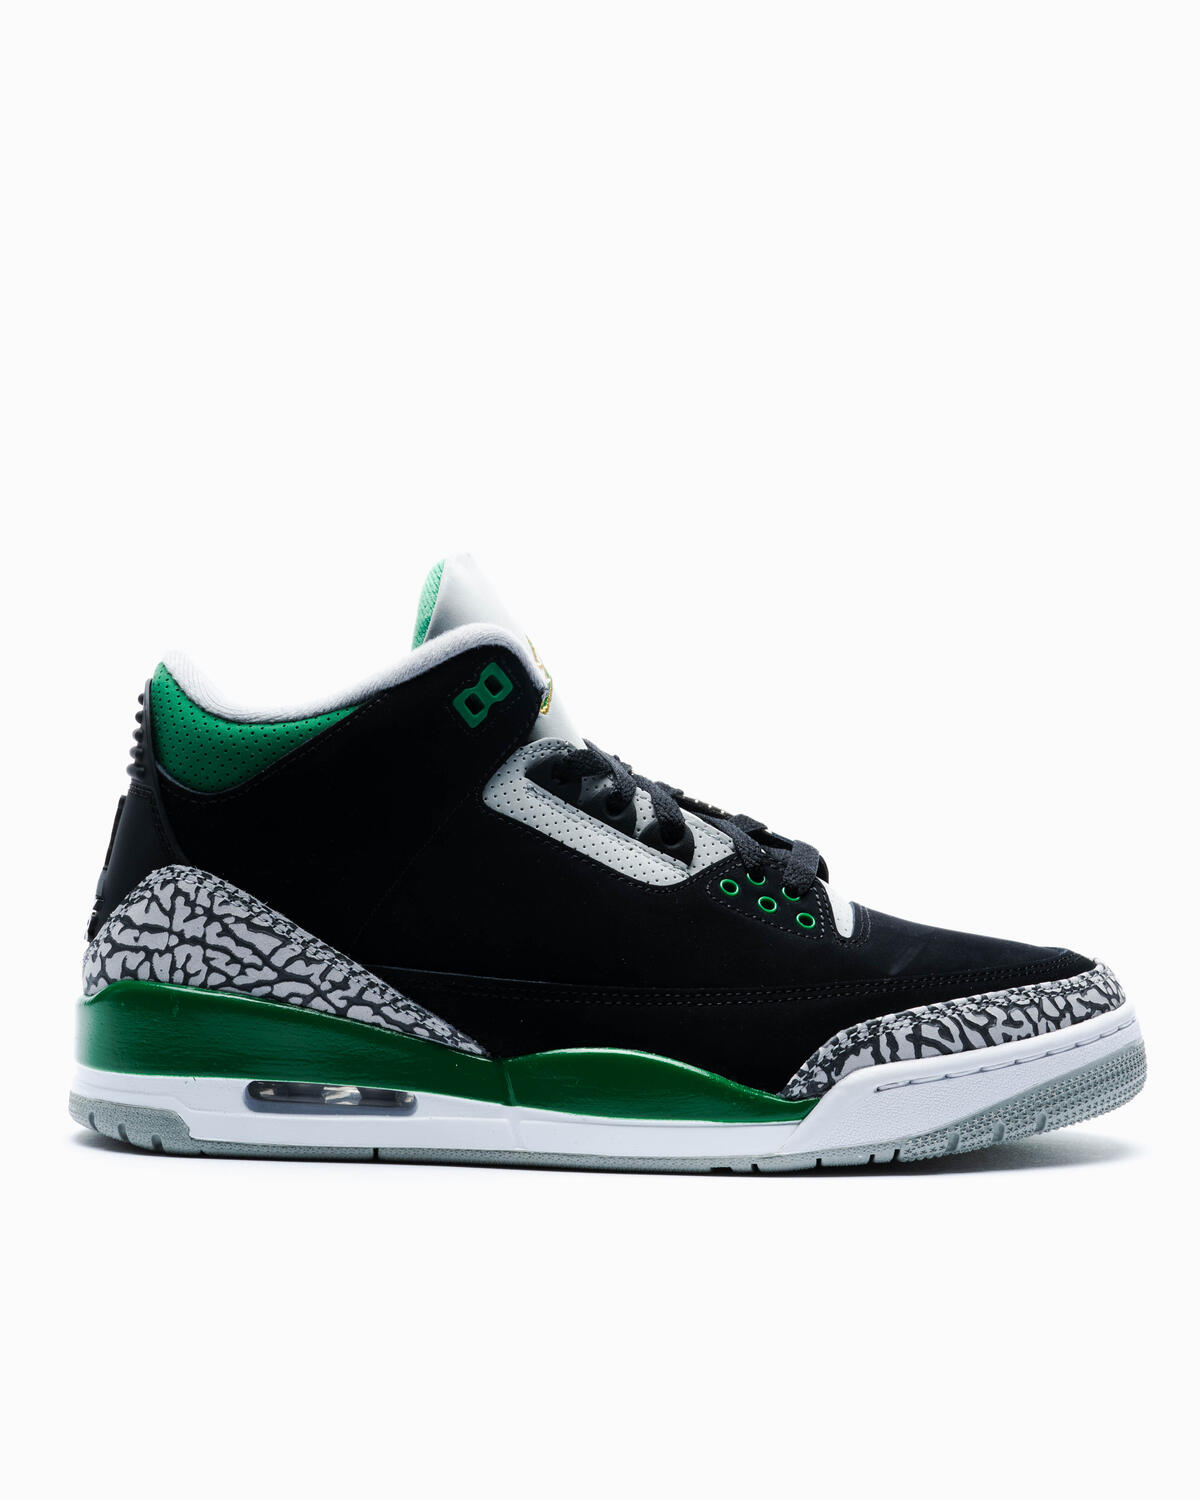 Michael Jordan Autographed Nike Air Jordan 1 Retro High Pine Green and  Black Shoes